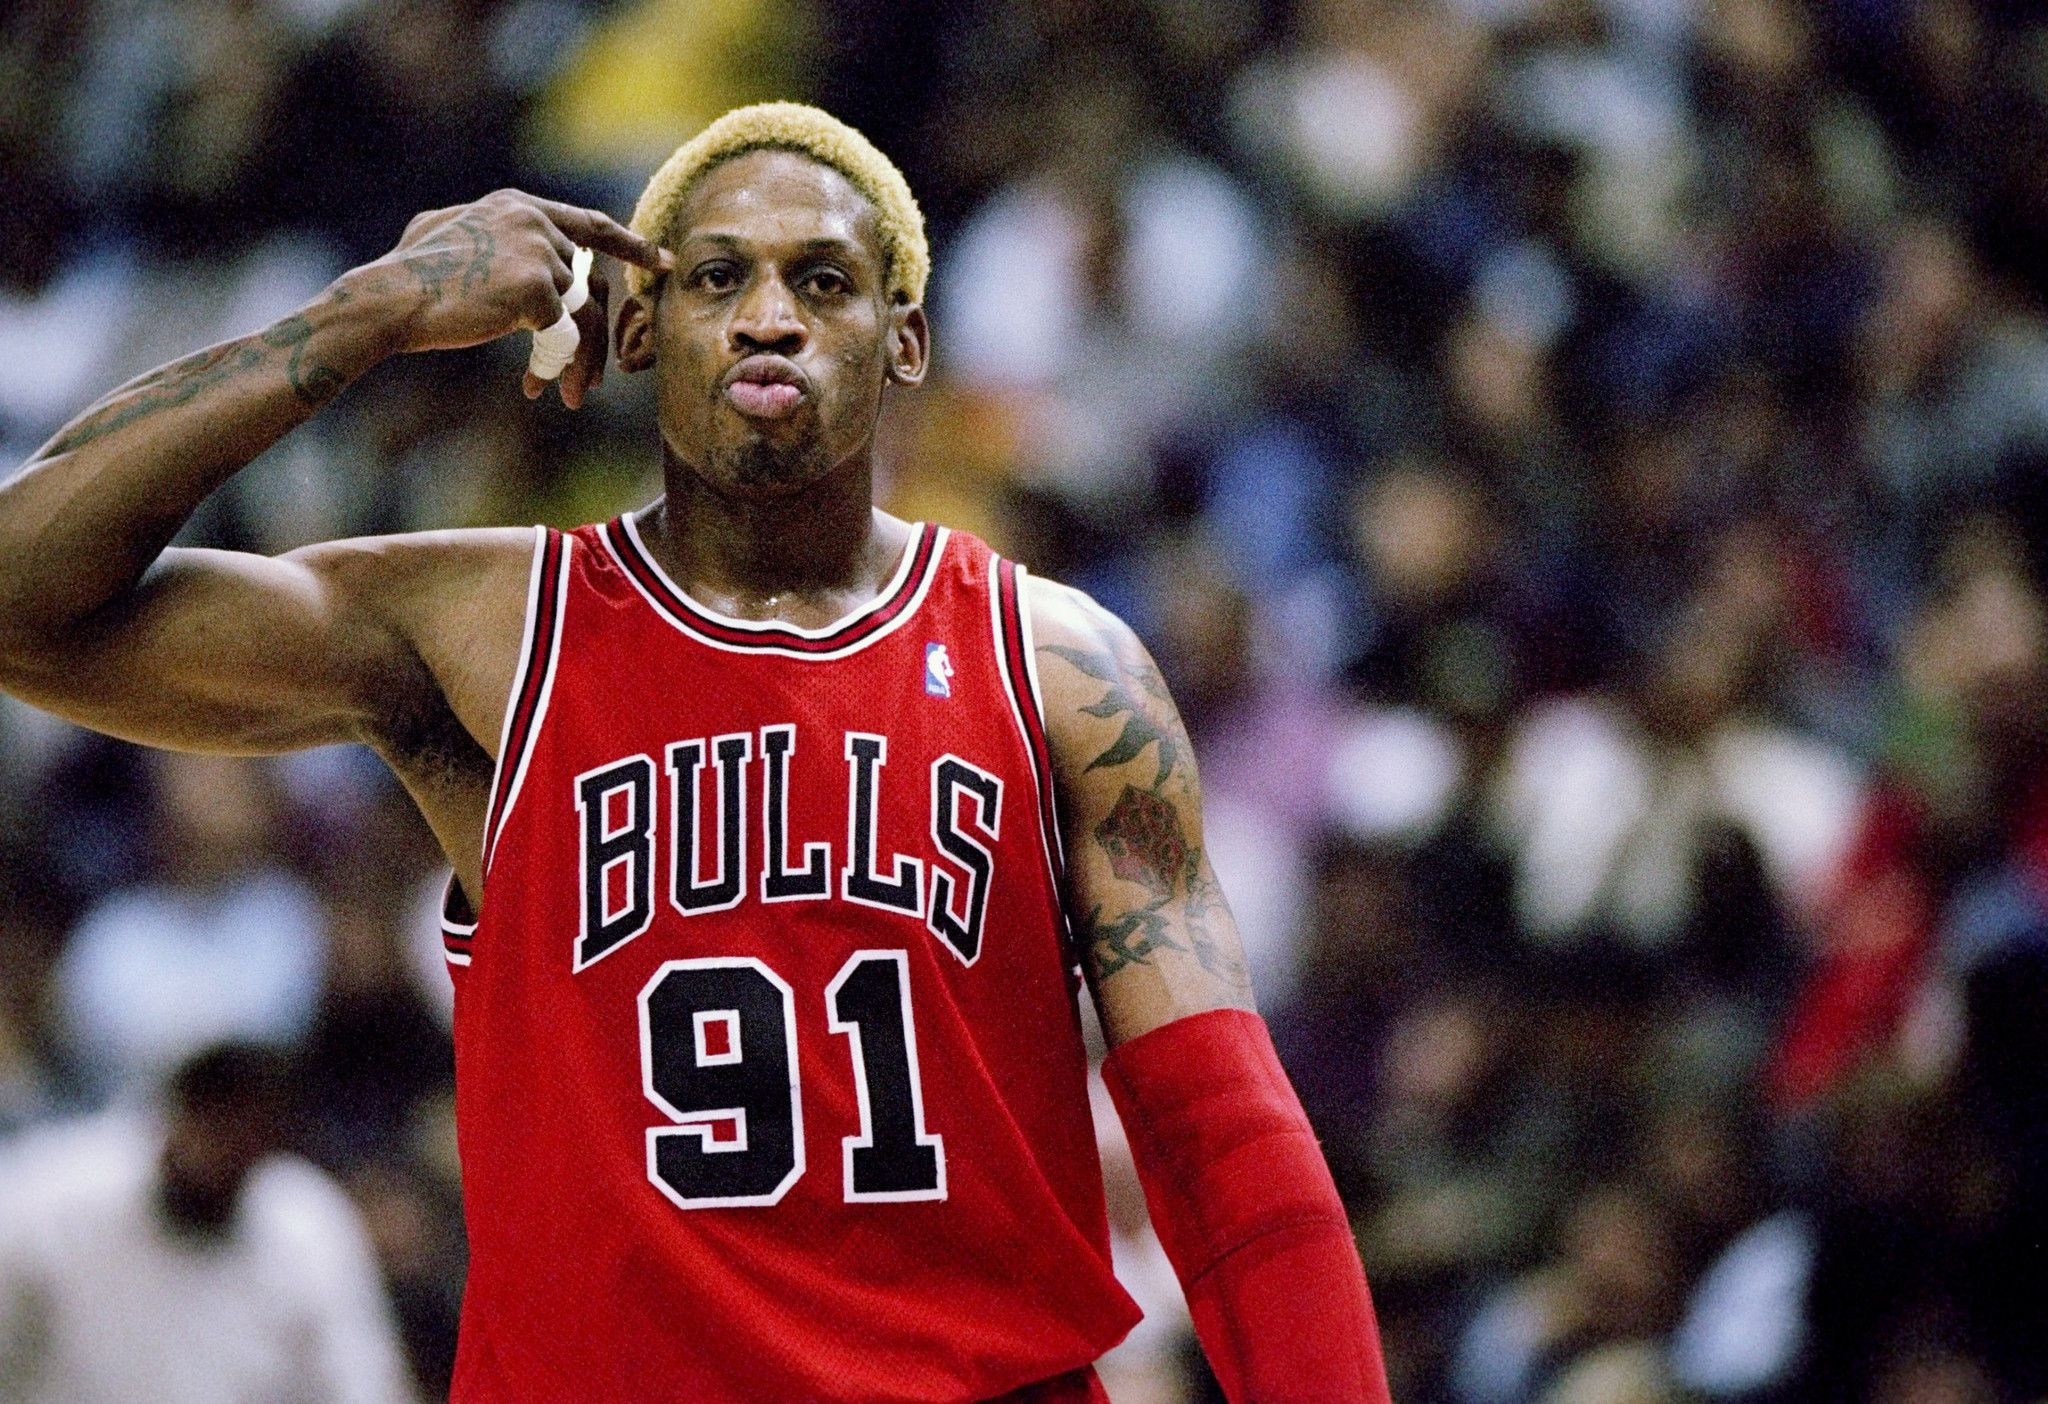 Michael Jordan calls final season with Bulls 'a trying year' - ESPN